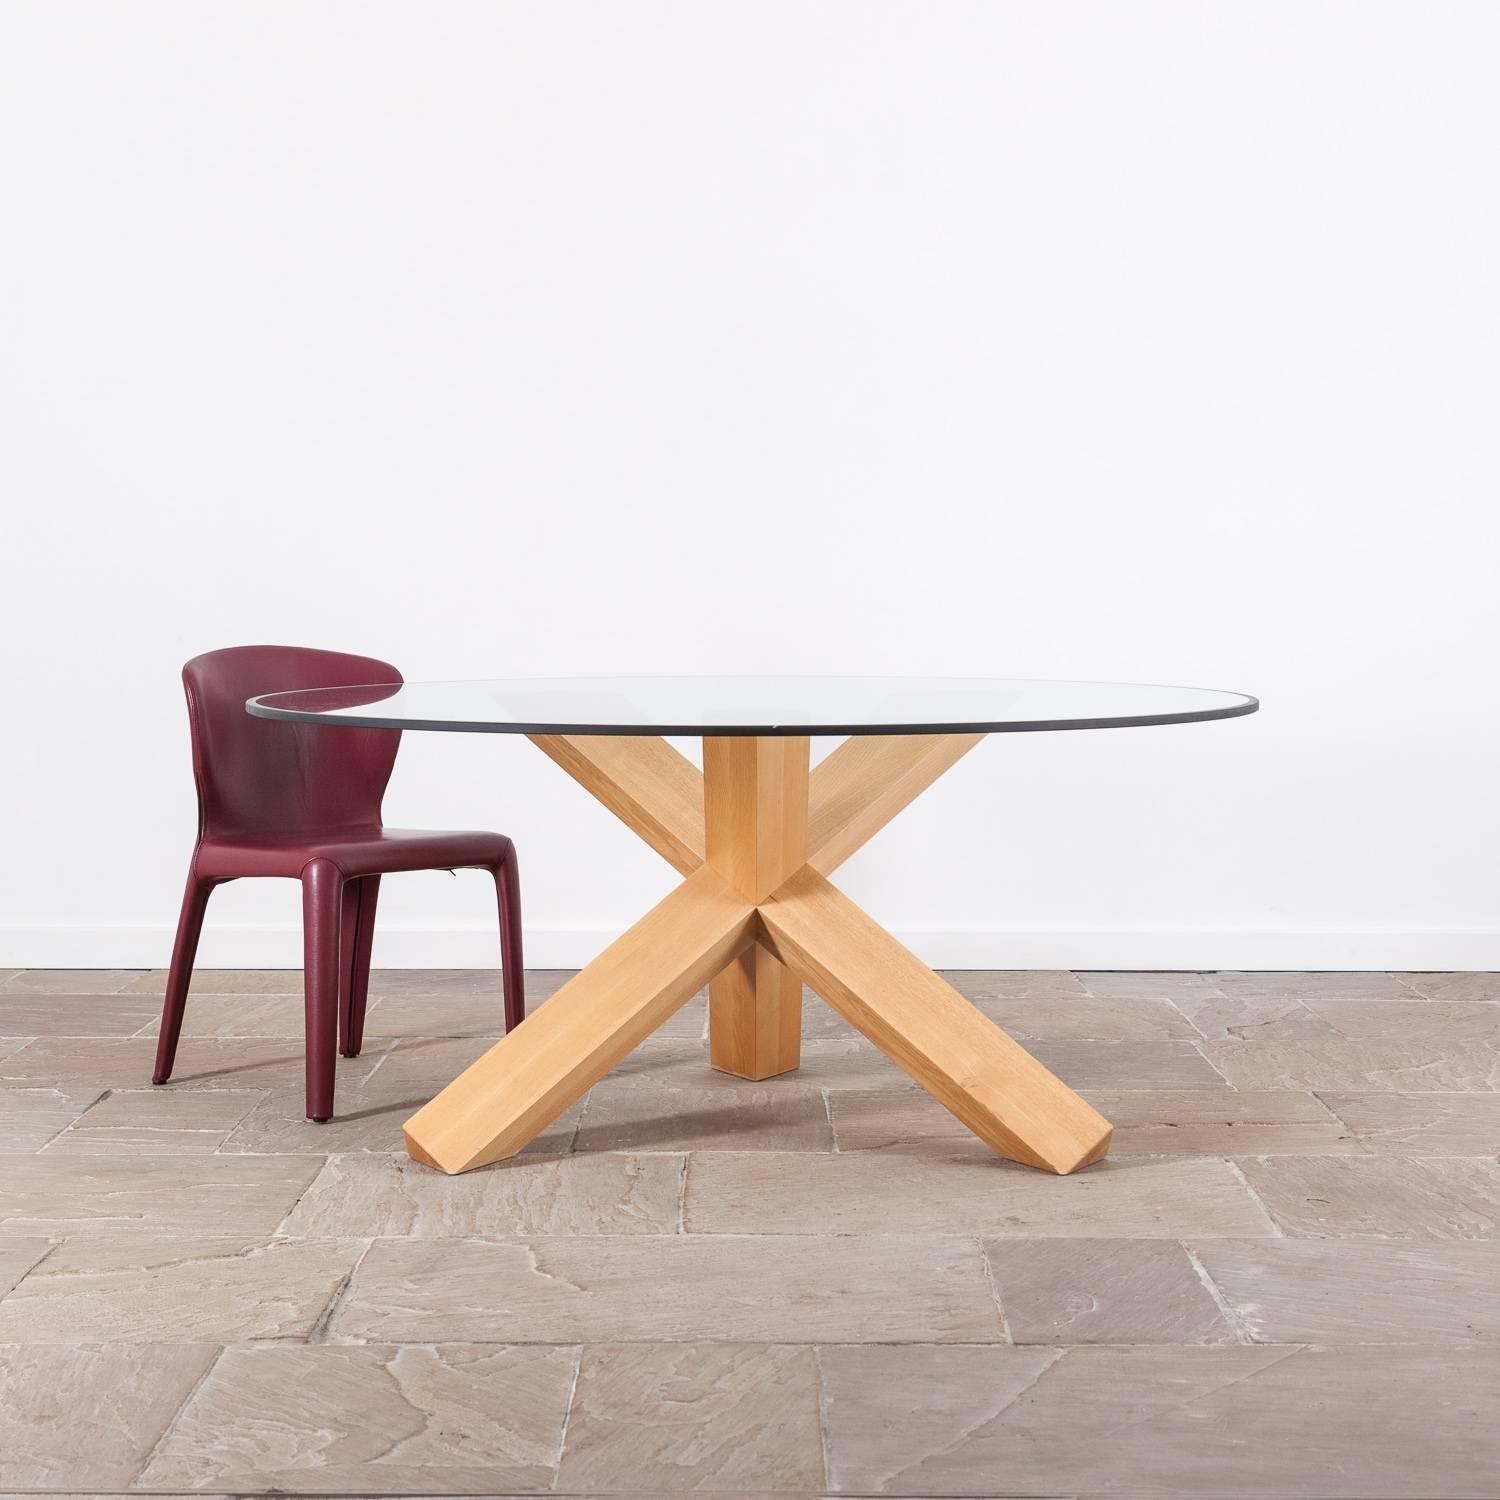 20th Century La Rotonda Dining Table by Mario Bellini for Cassina